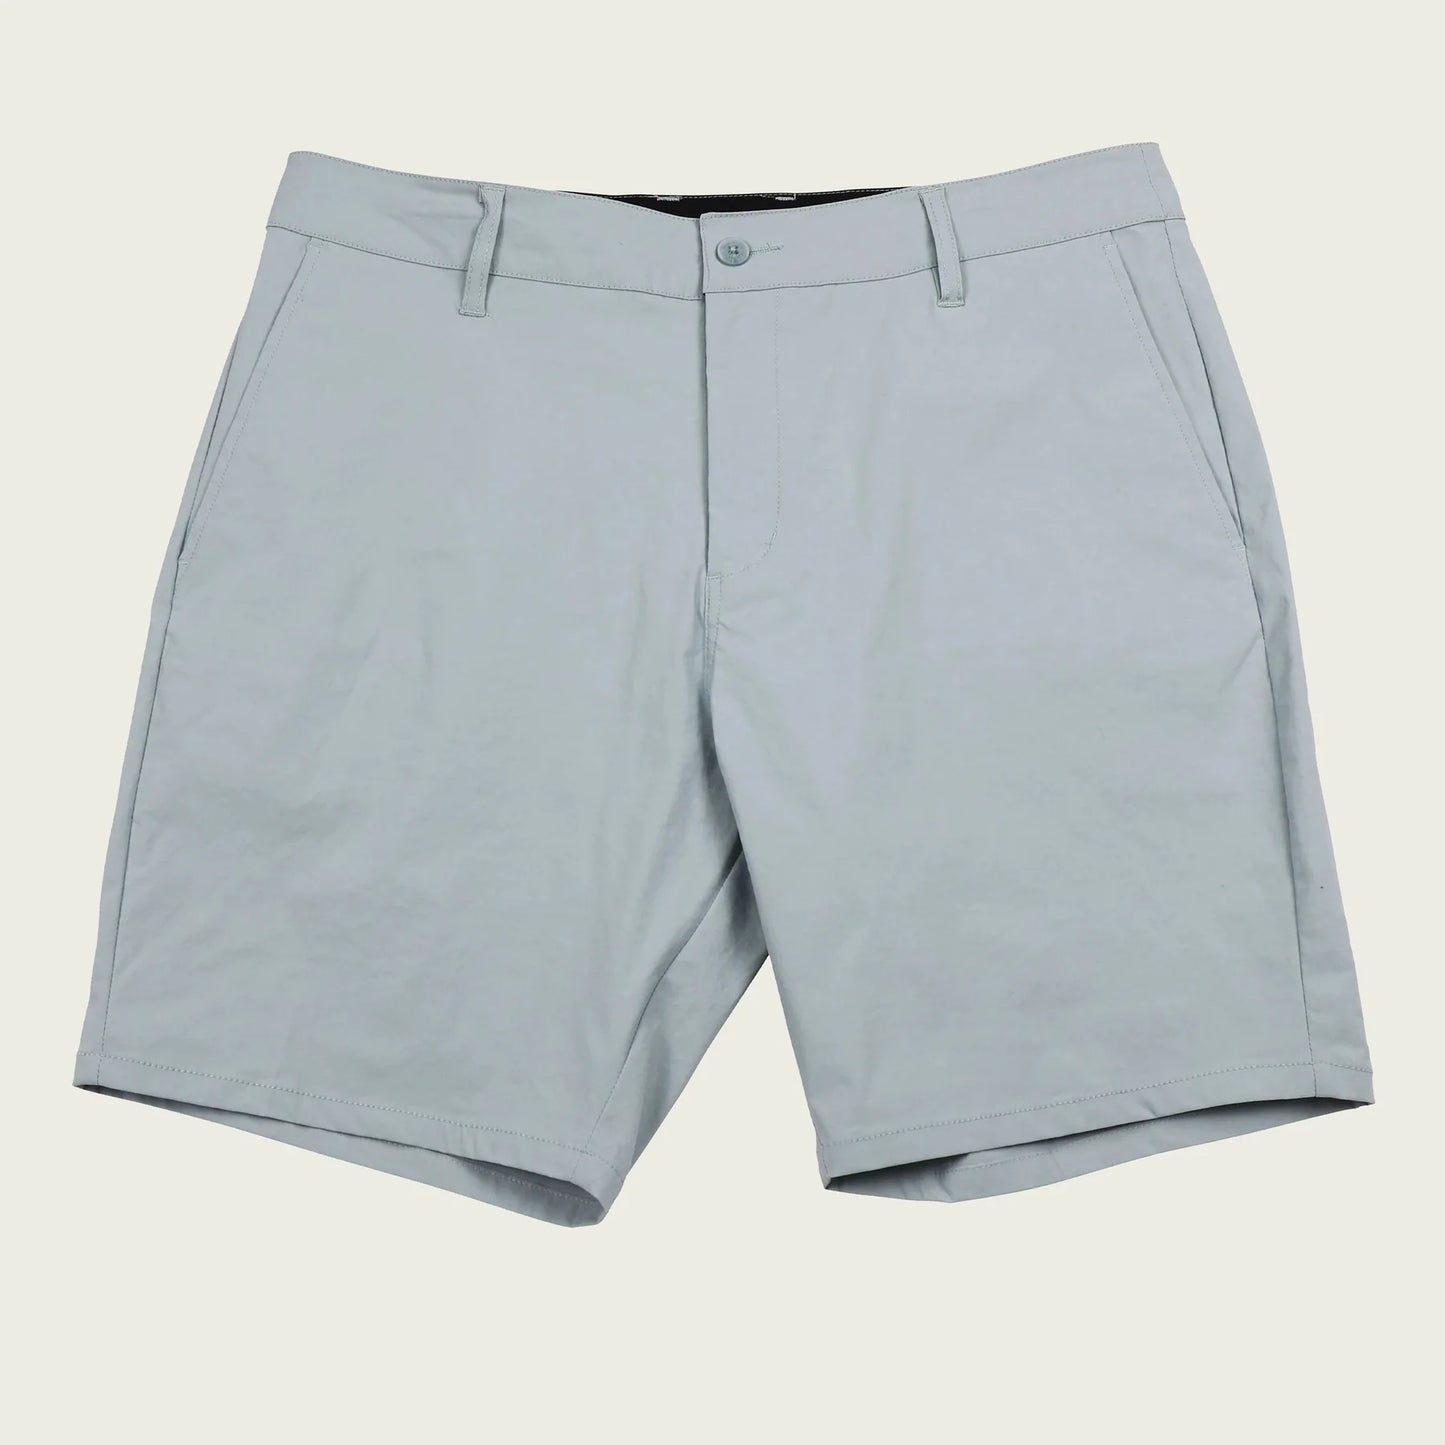 Marsh Wear Prime Shorts- Smoke